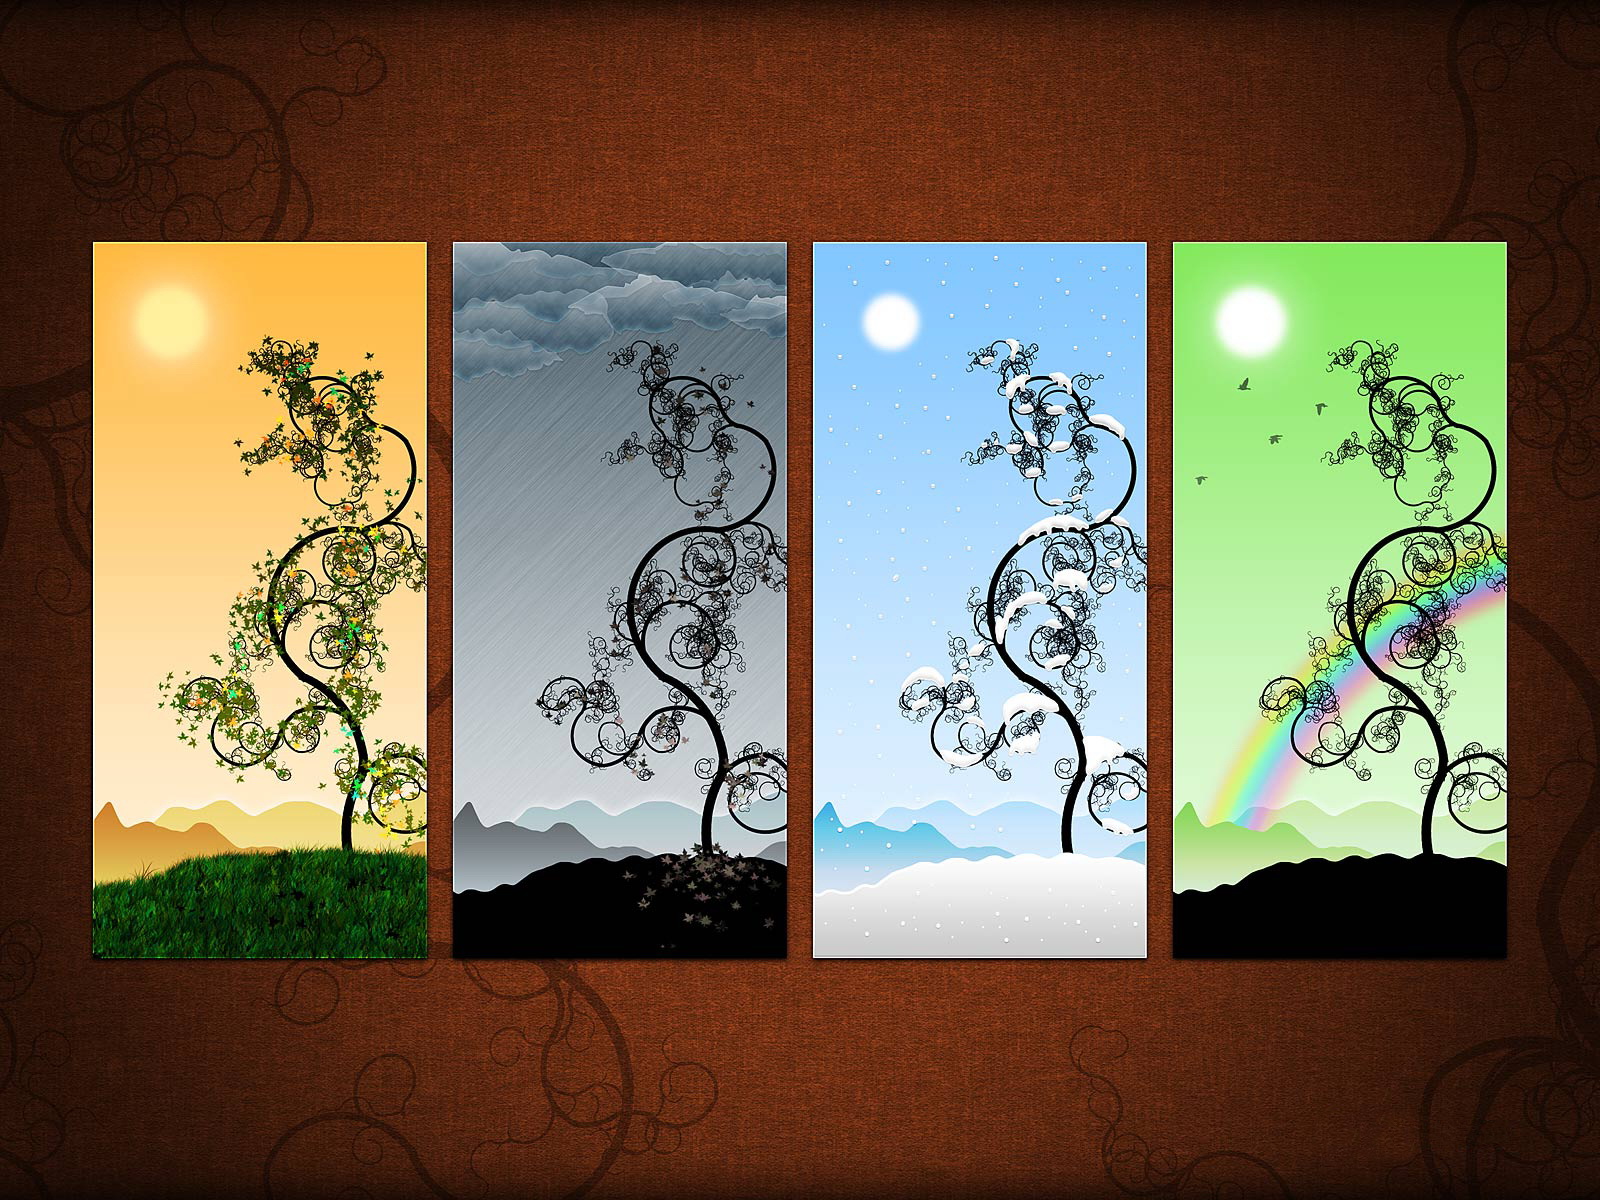 Download the Four Seasons Wallpaper, Four Seasons iPhone Wallpaper